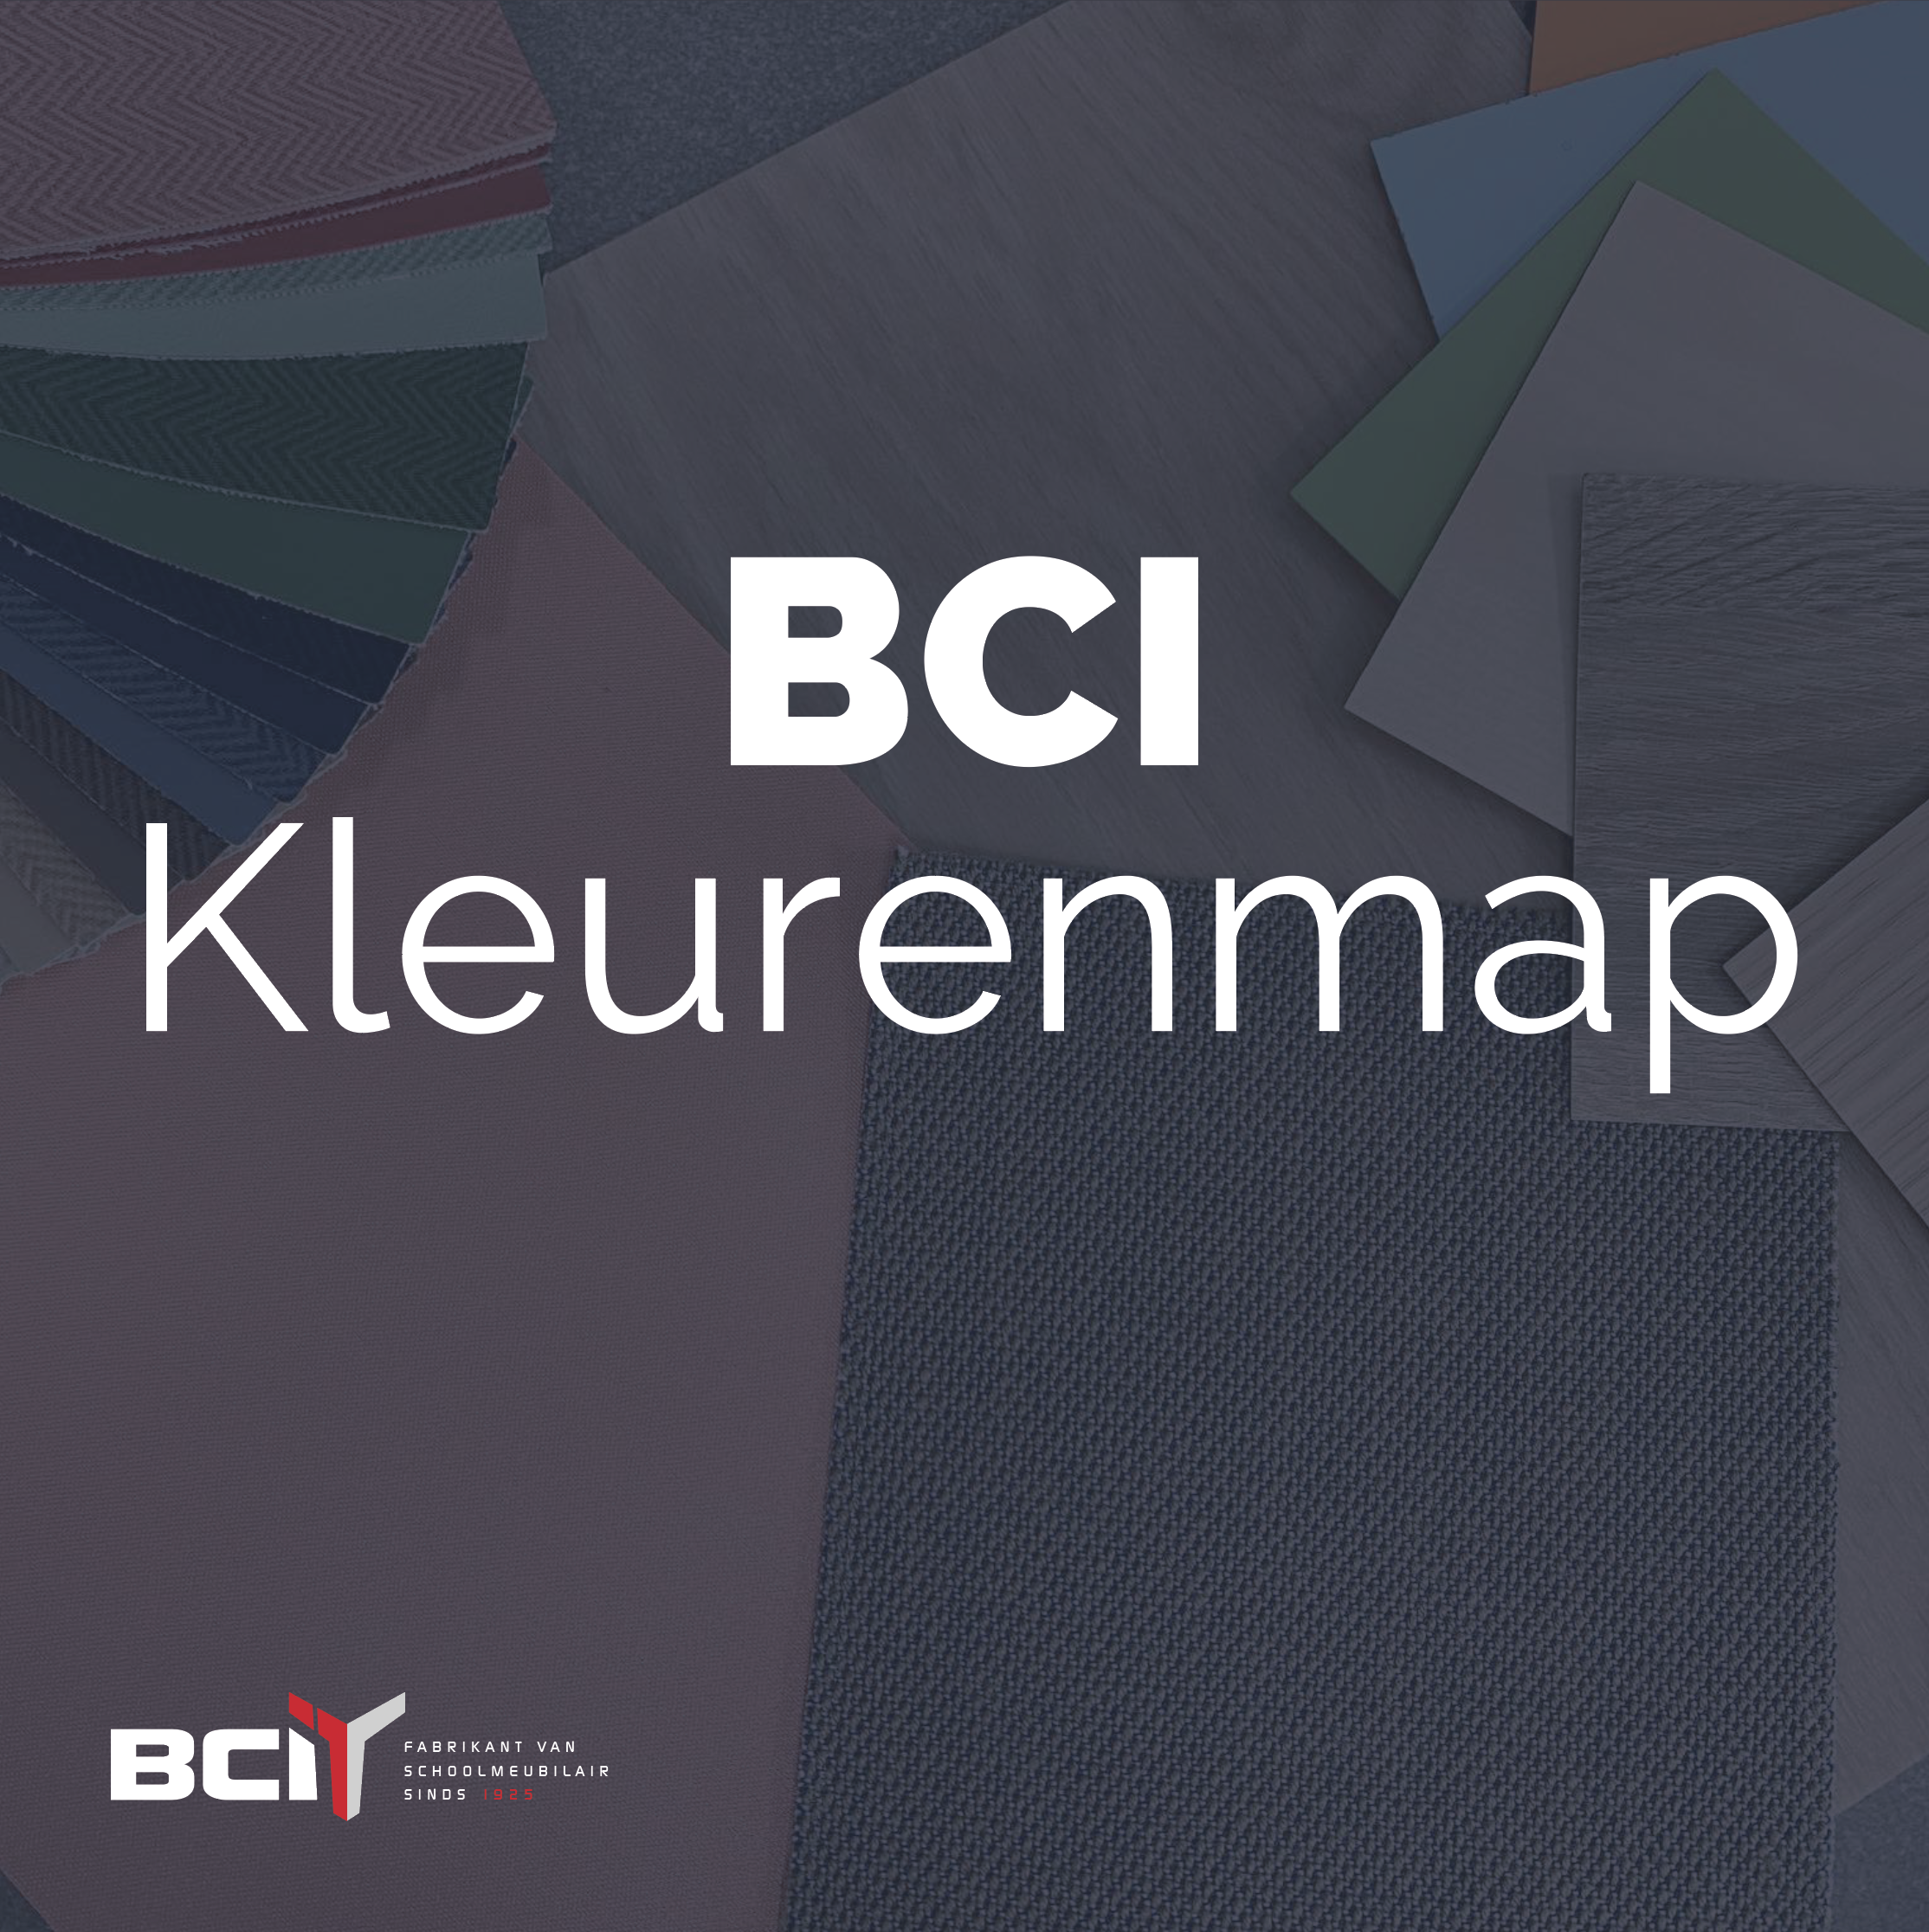 BCI kleurenmap